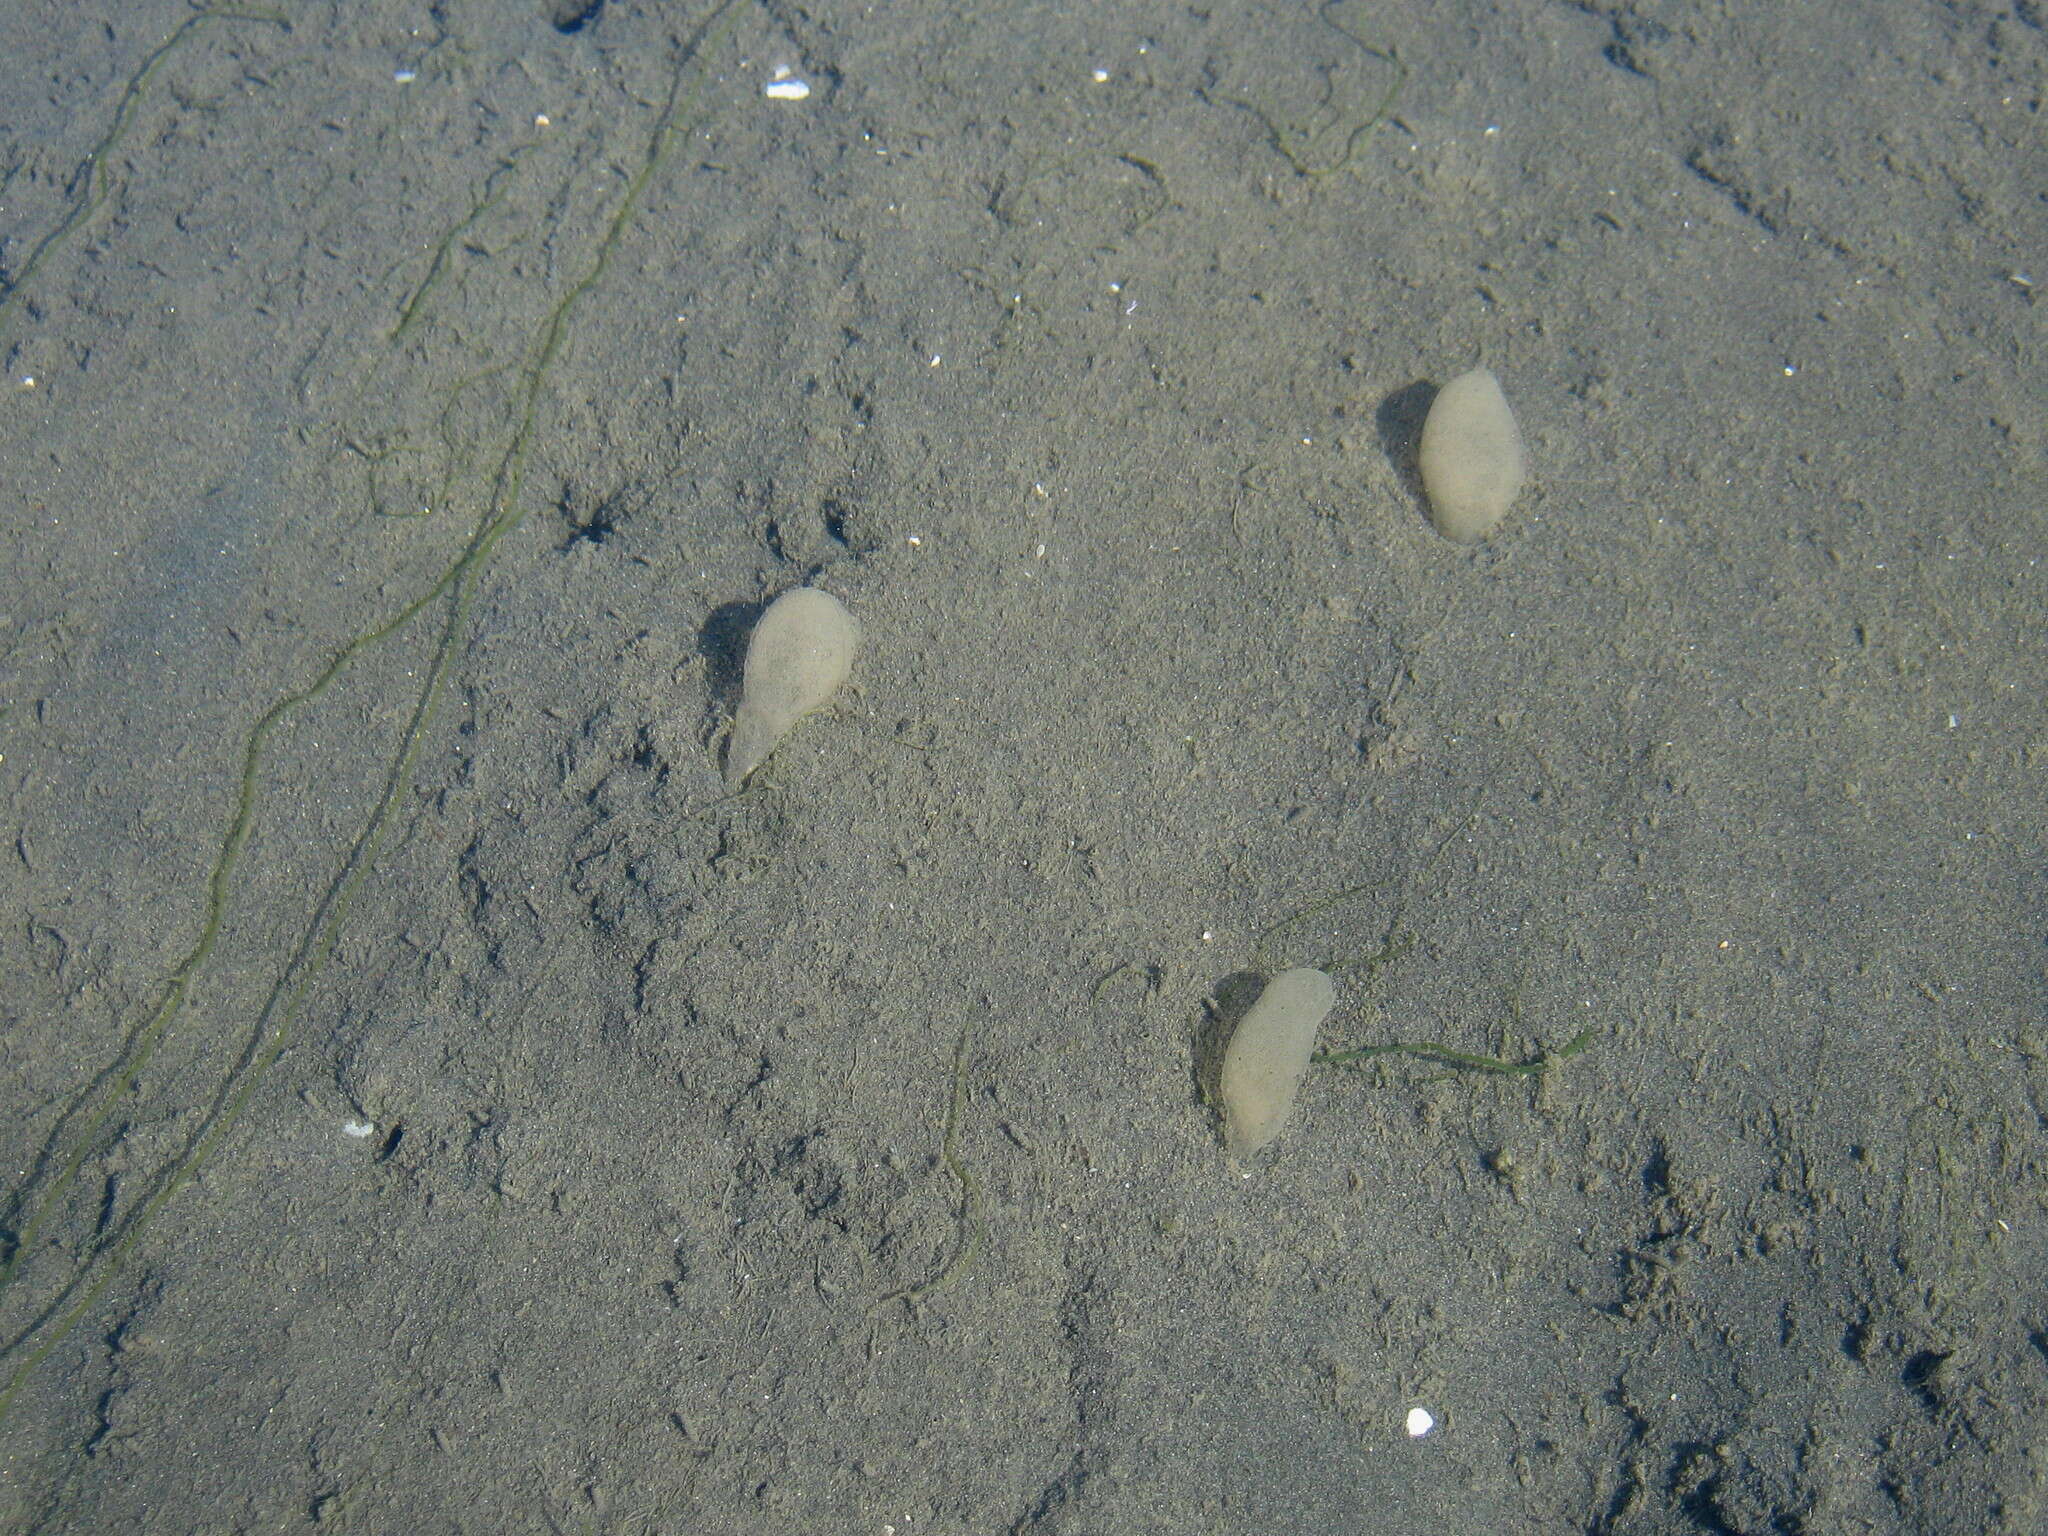 Image of Sea snail